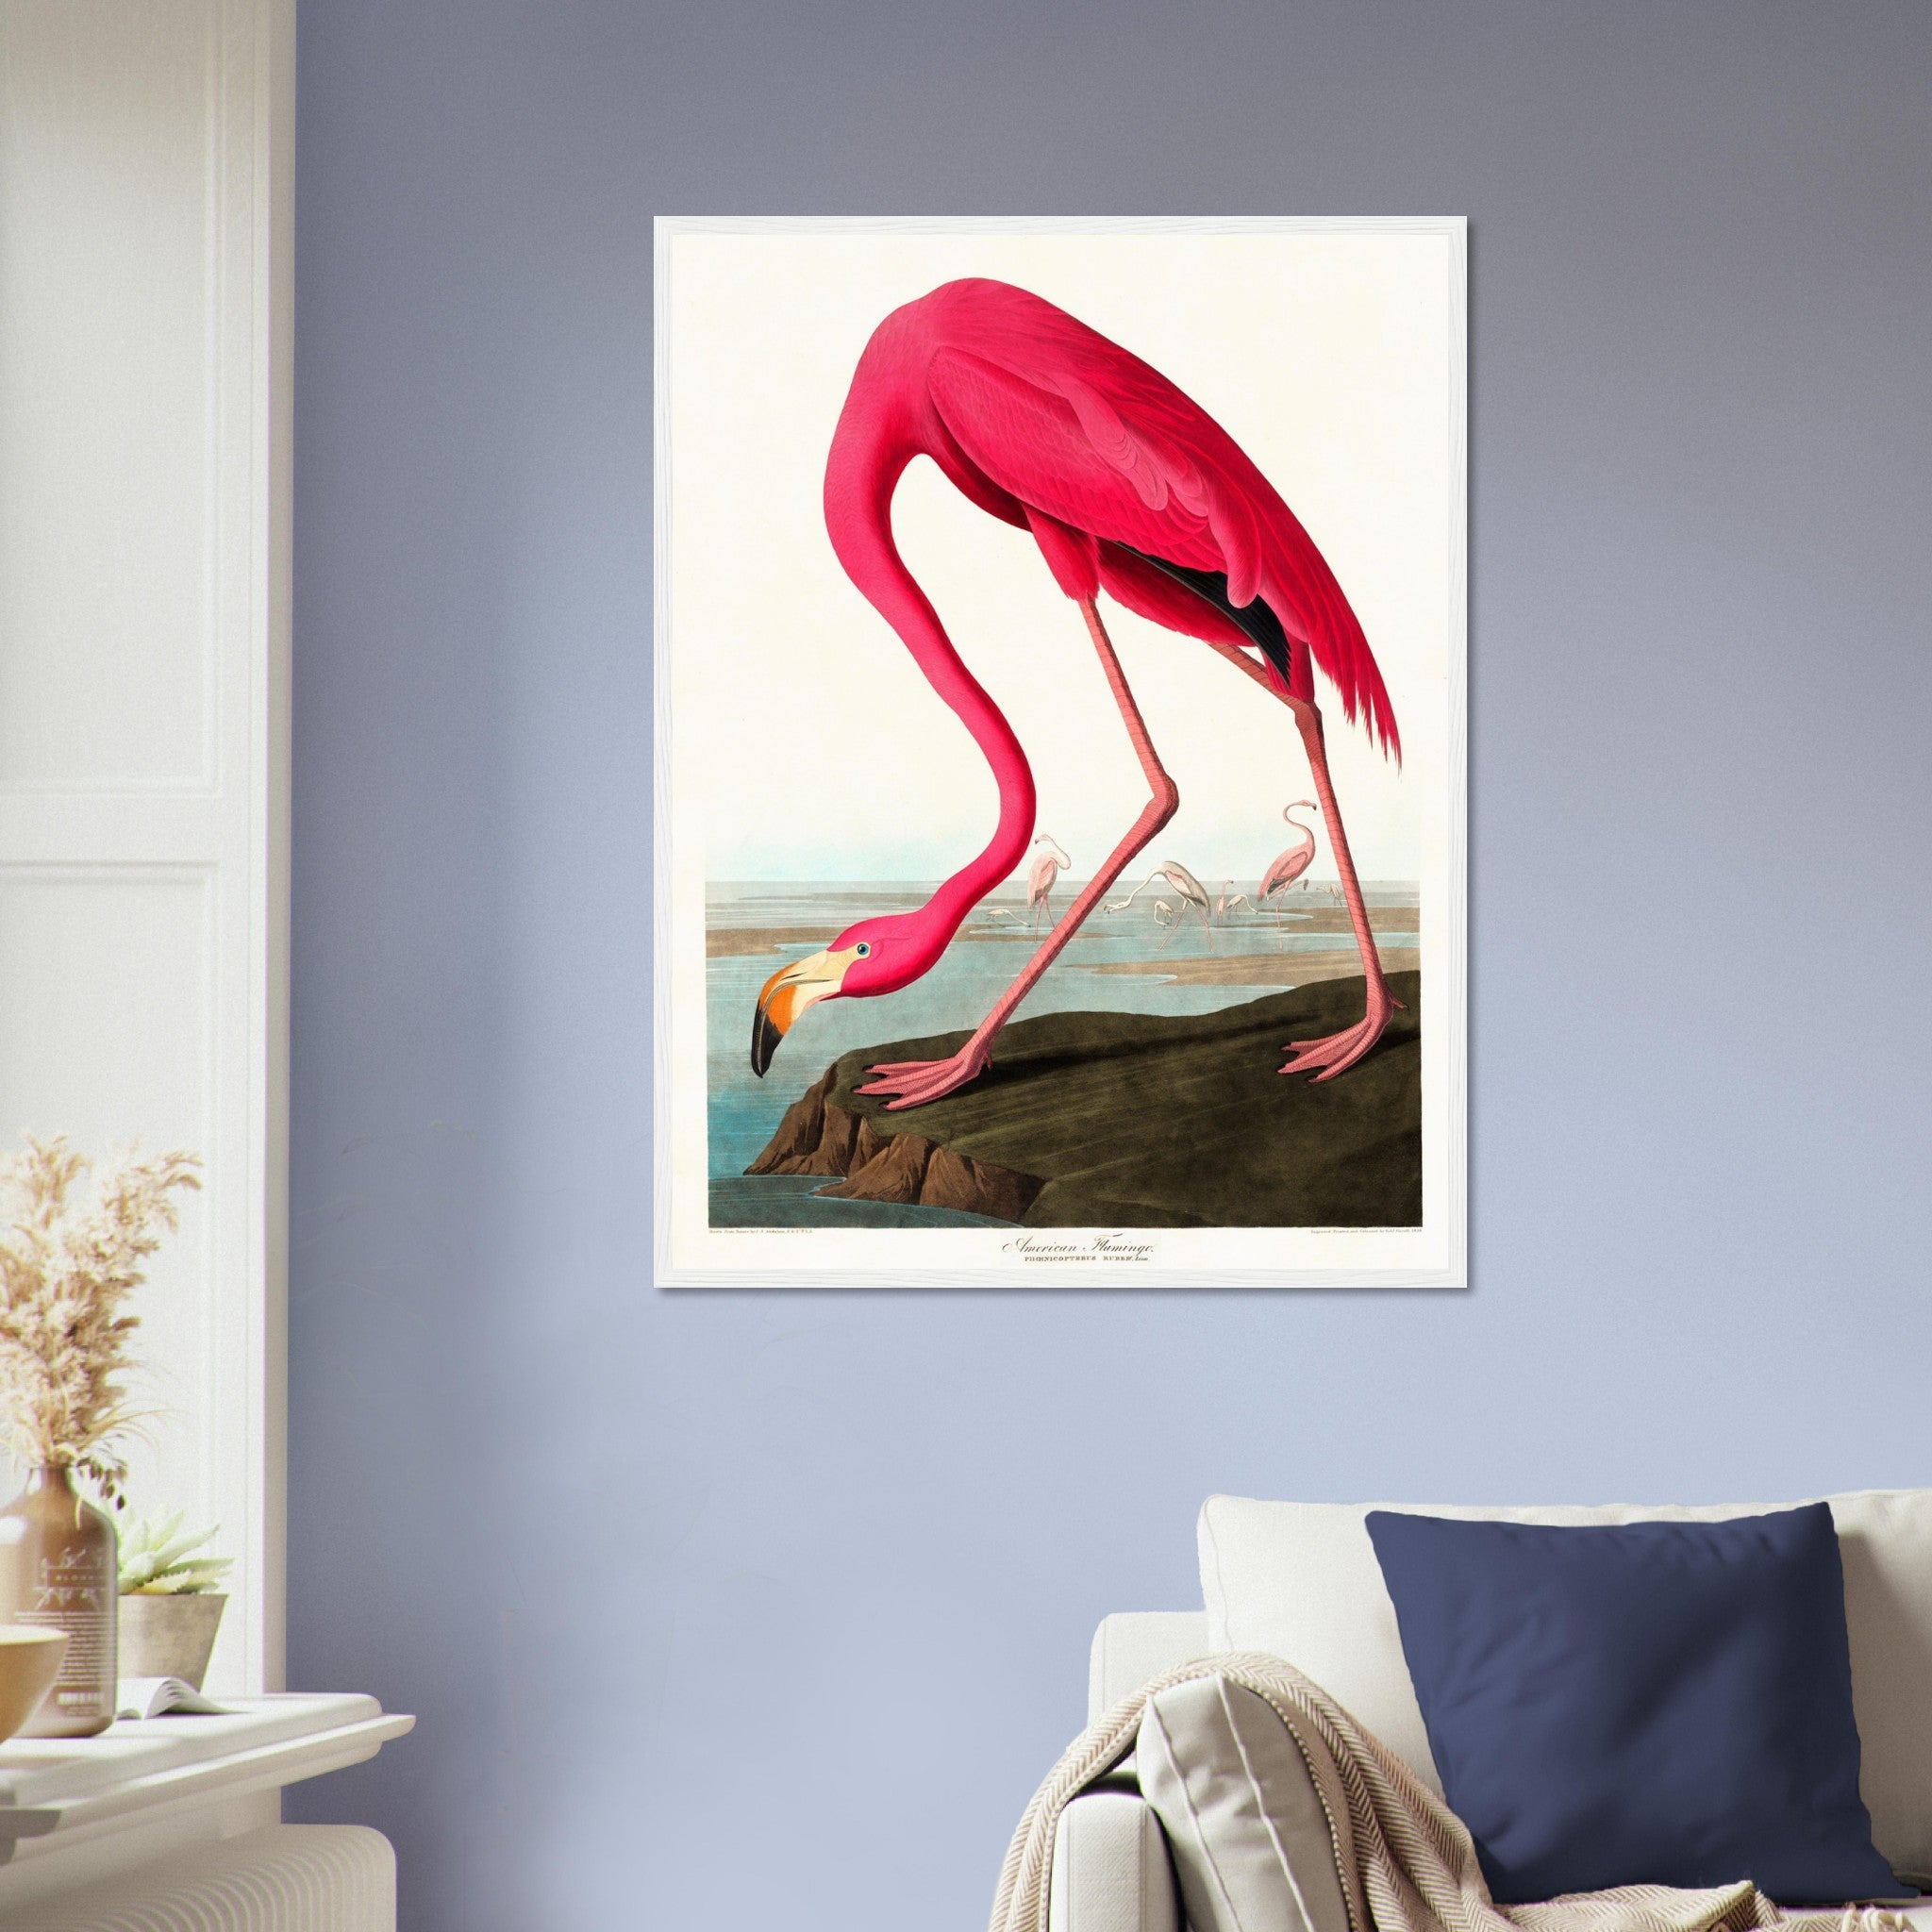 Vintage Flamingo Framed, John Audubon, Vintage Texian Flamingo Art - Vintage Flamingo Framed Print UK, EU USA Domestic Shipping - WallArtPrints4U